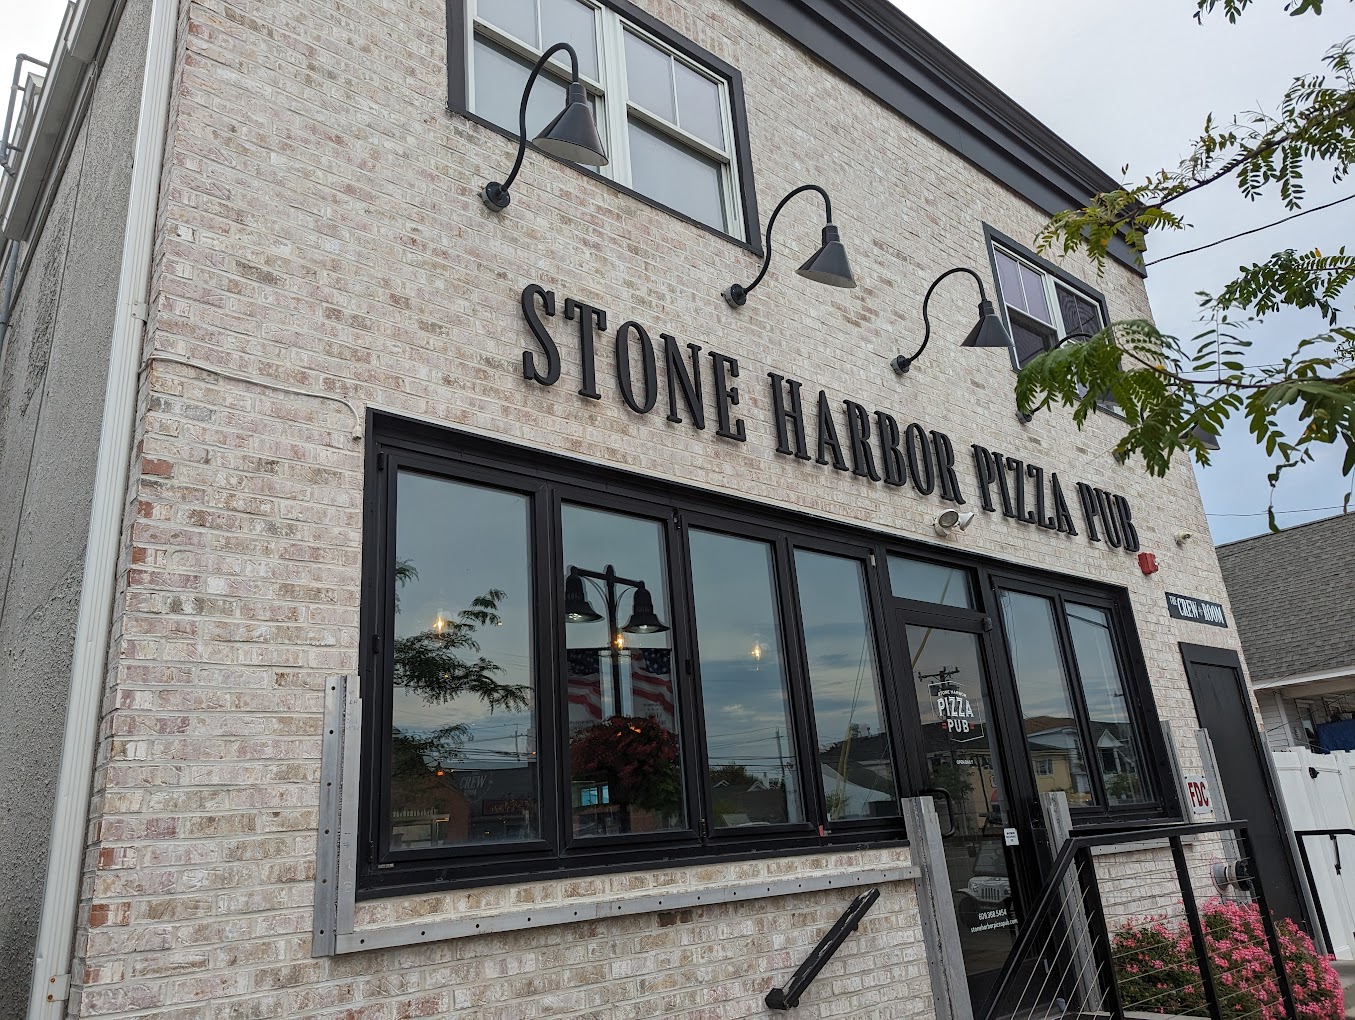 Stone Harbor Pizza Pub